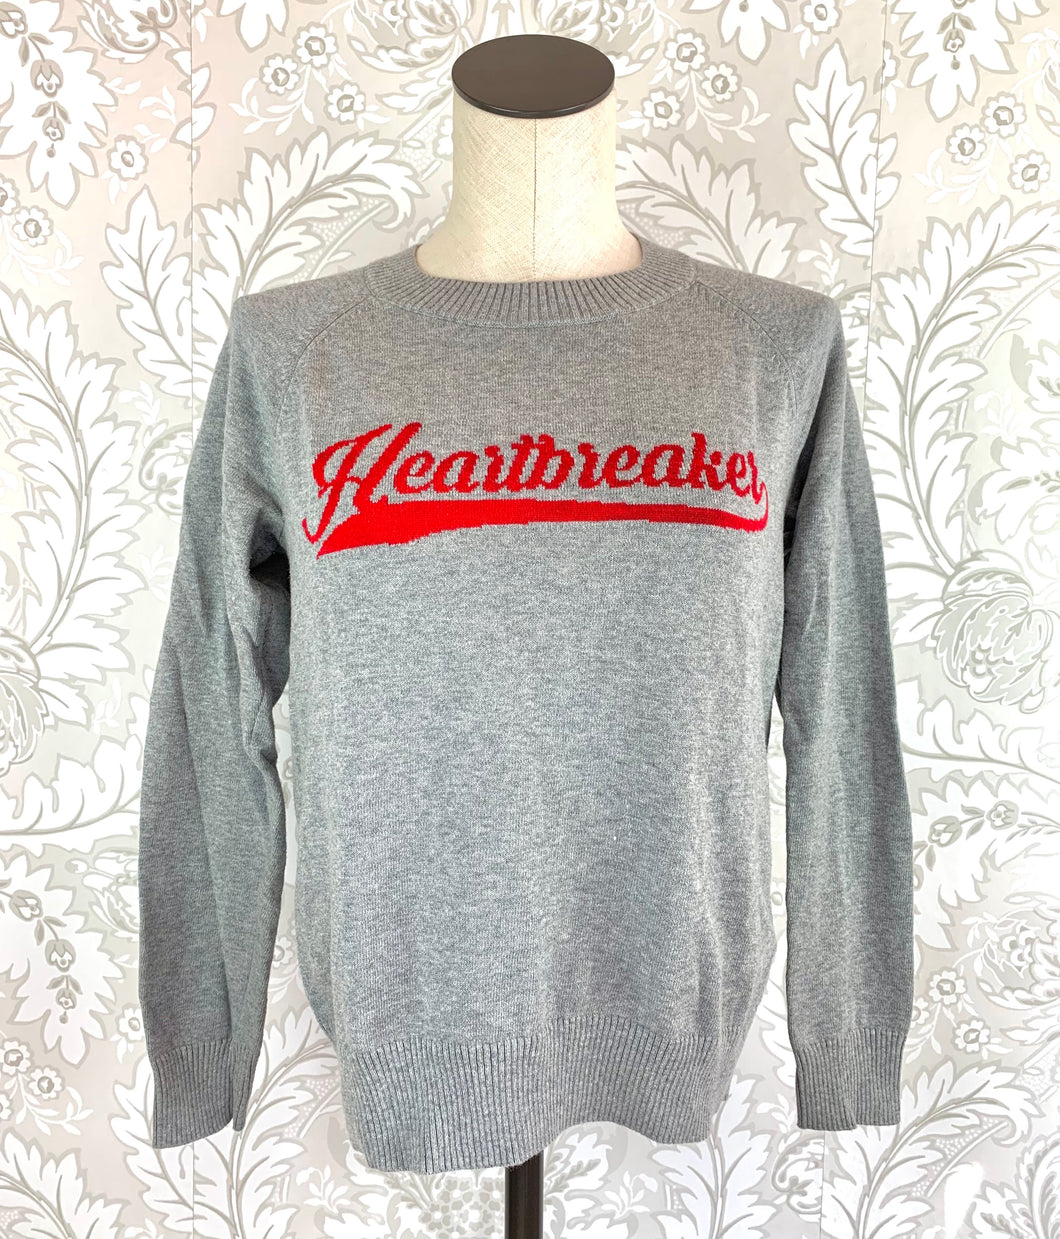 Rebecca Minkoff “Hearbreaker” Crewneck Sweater size XS